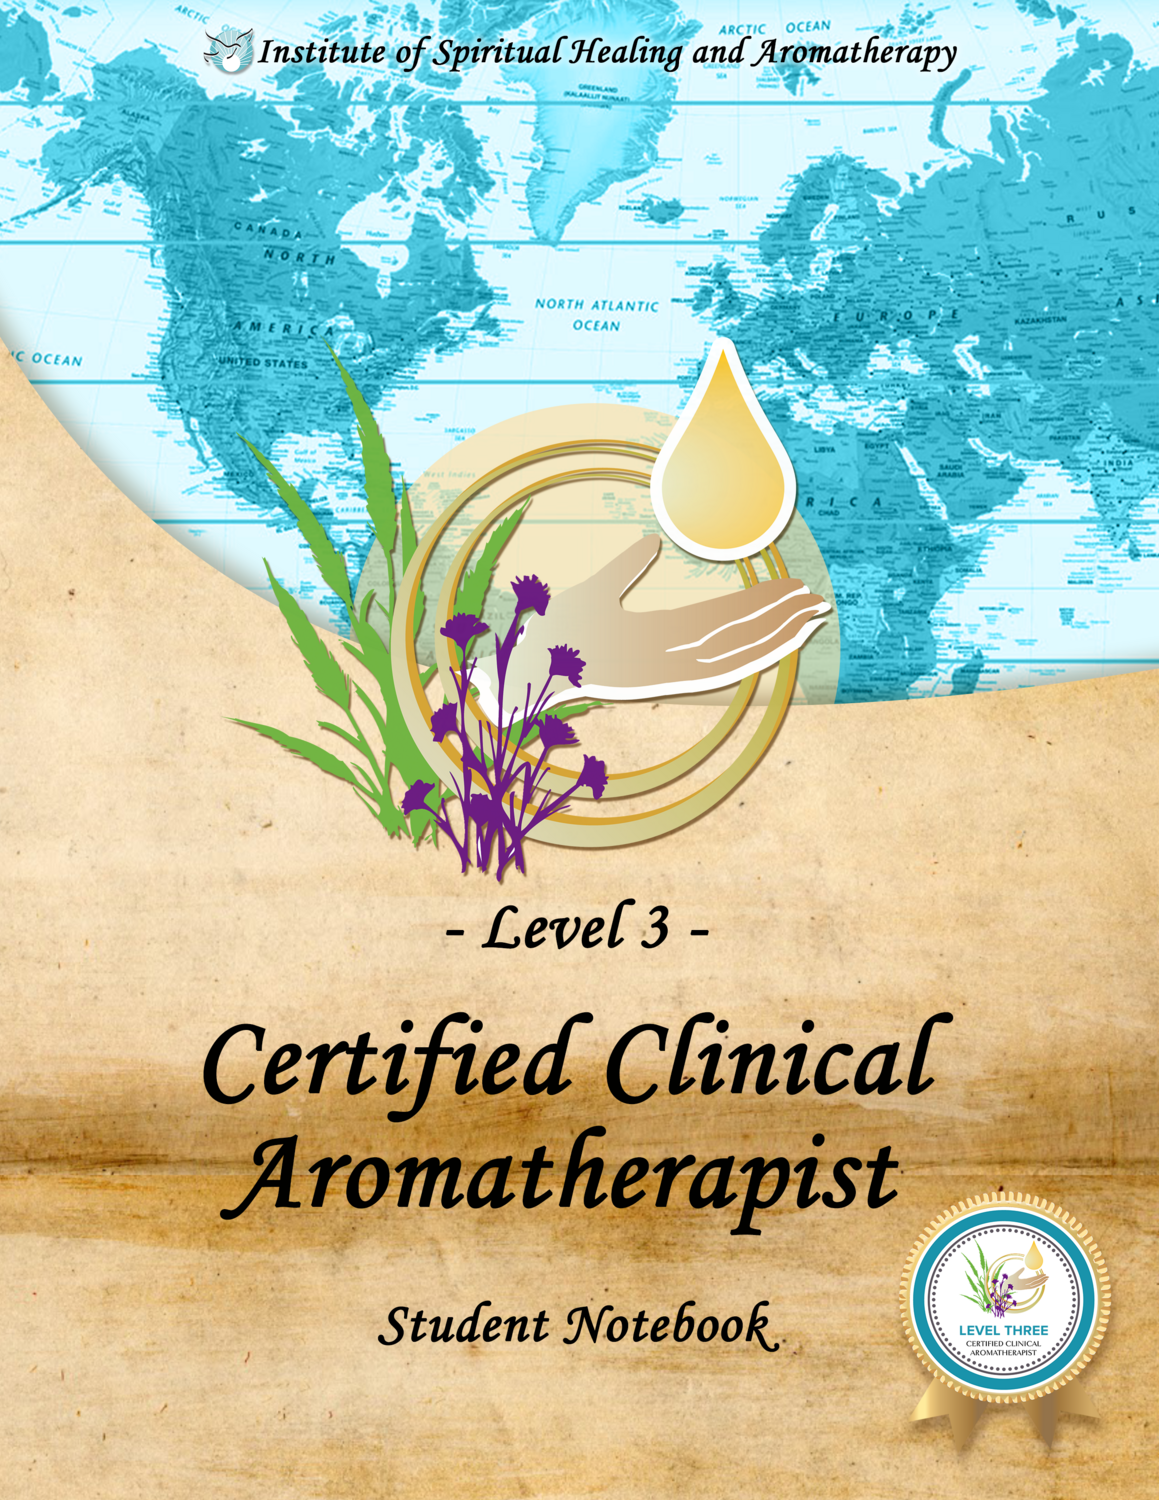 Level 3 - Certified Clinical Aromatherapist - Ottawa Lake, MI or ZOOM - September 22-24, 2022